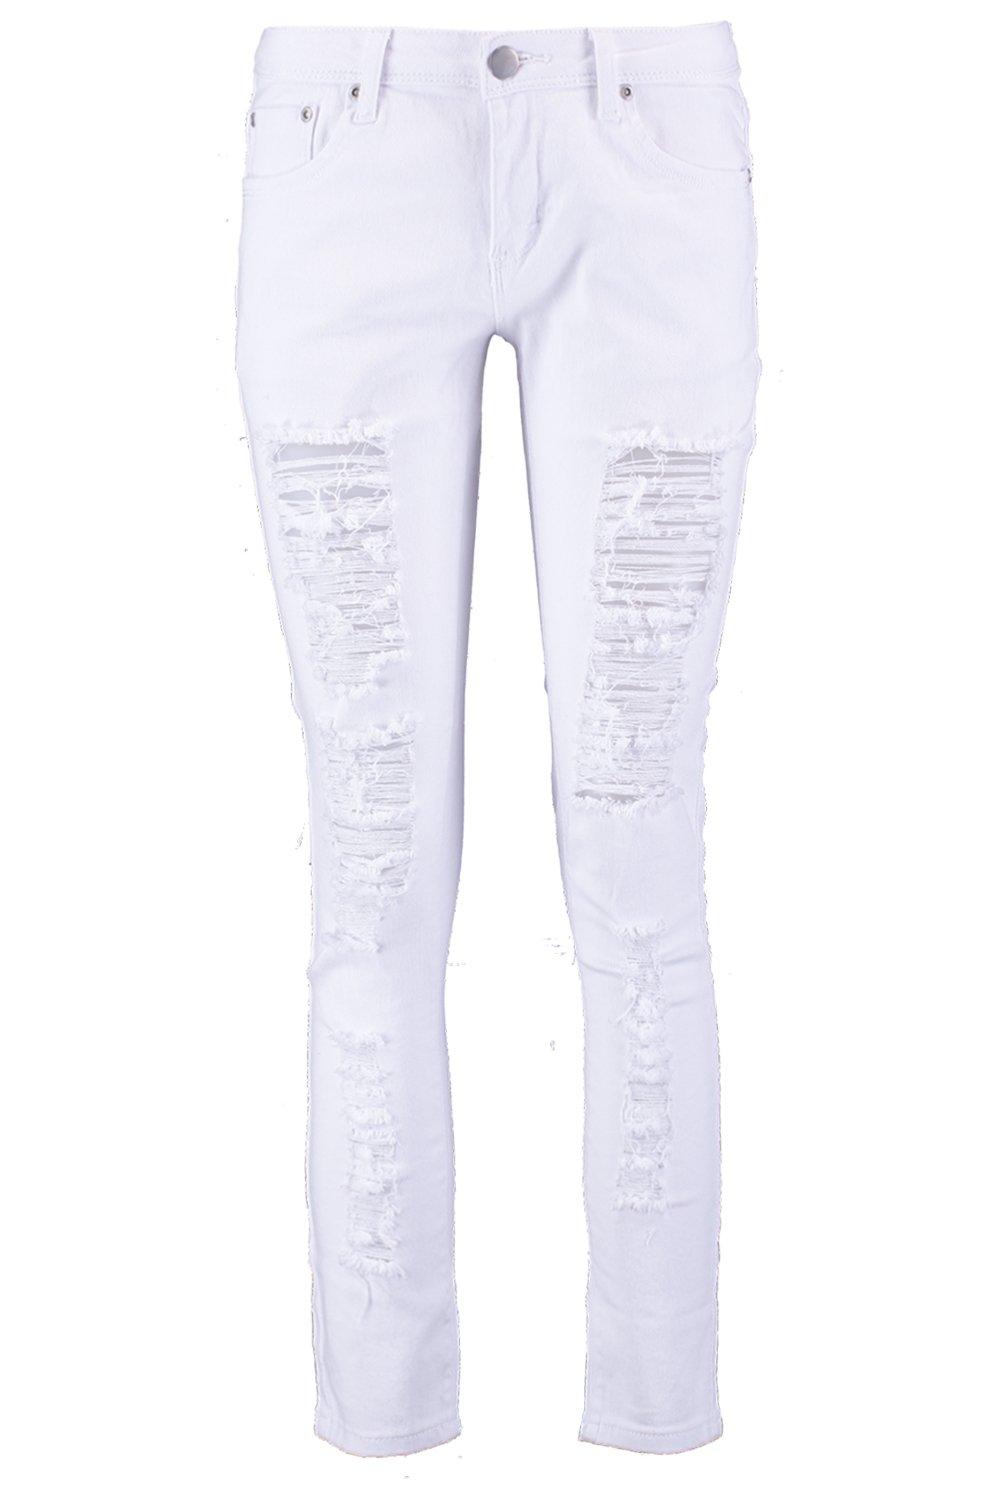 boohoo white jeans